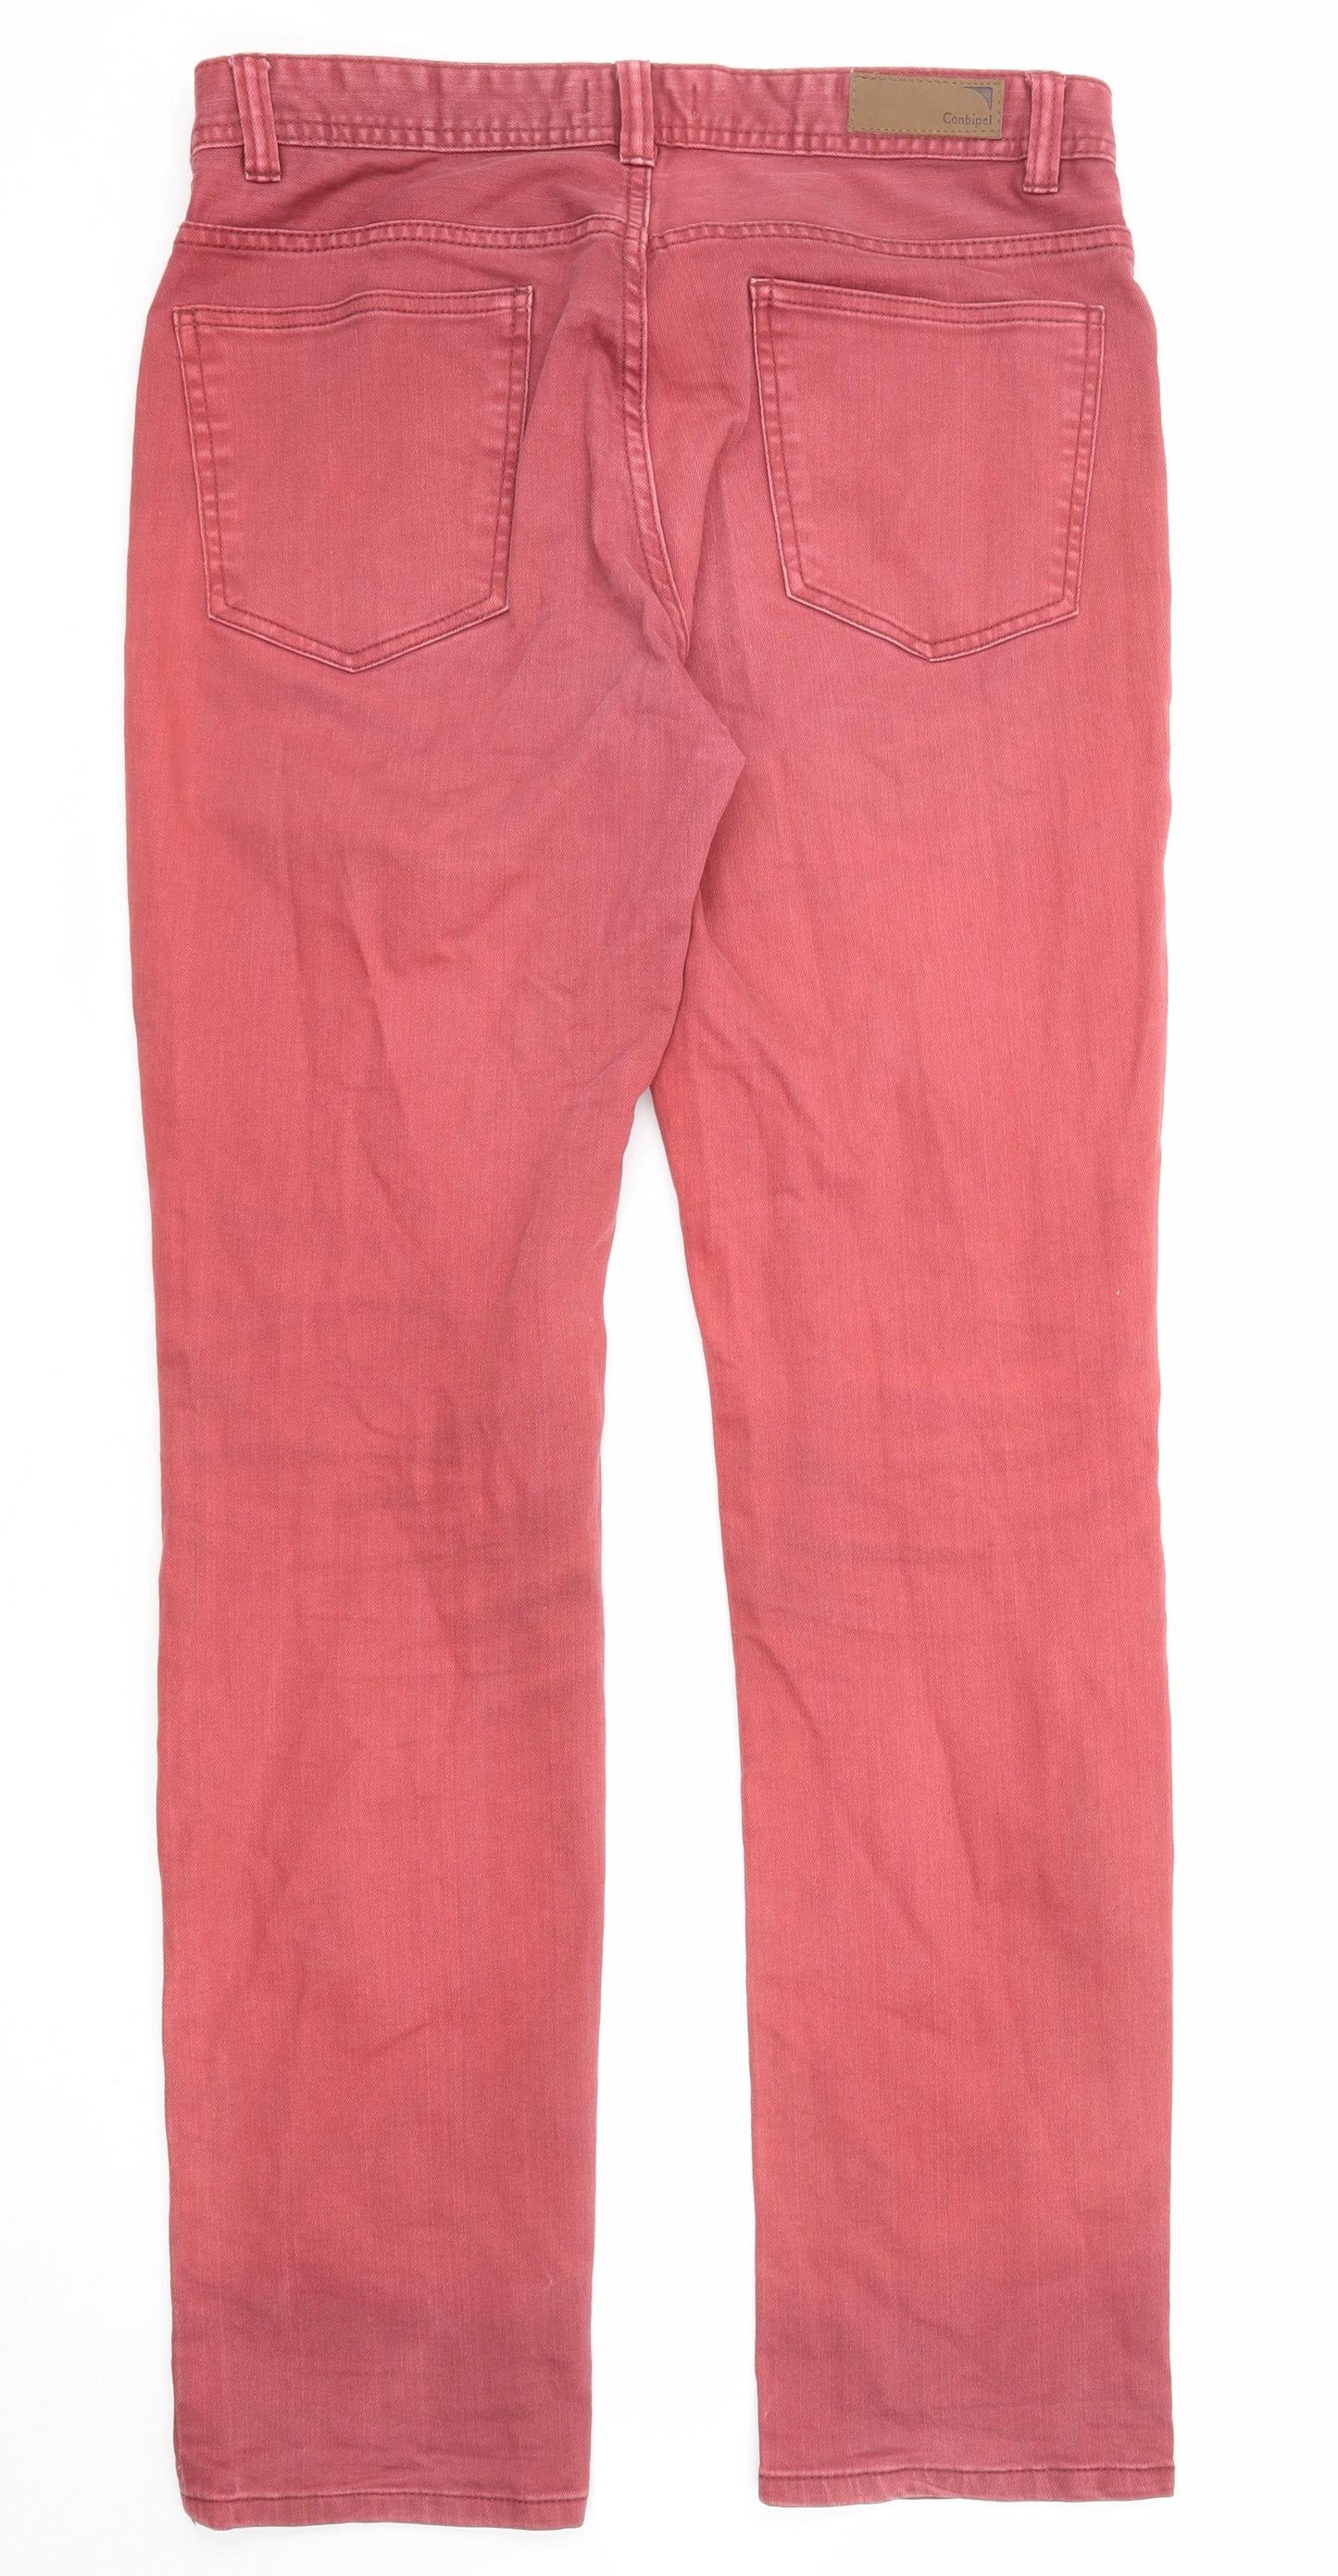 Conbipel Womens Red Cotton Straight Jeans Size 32 in Regular Zip